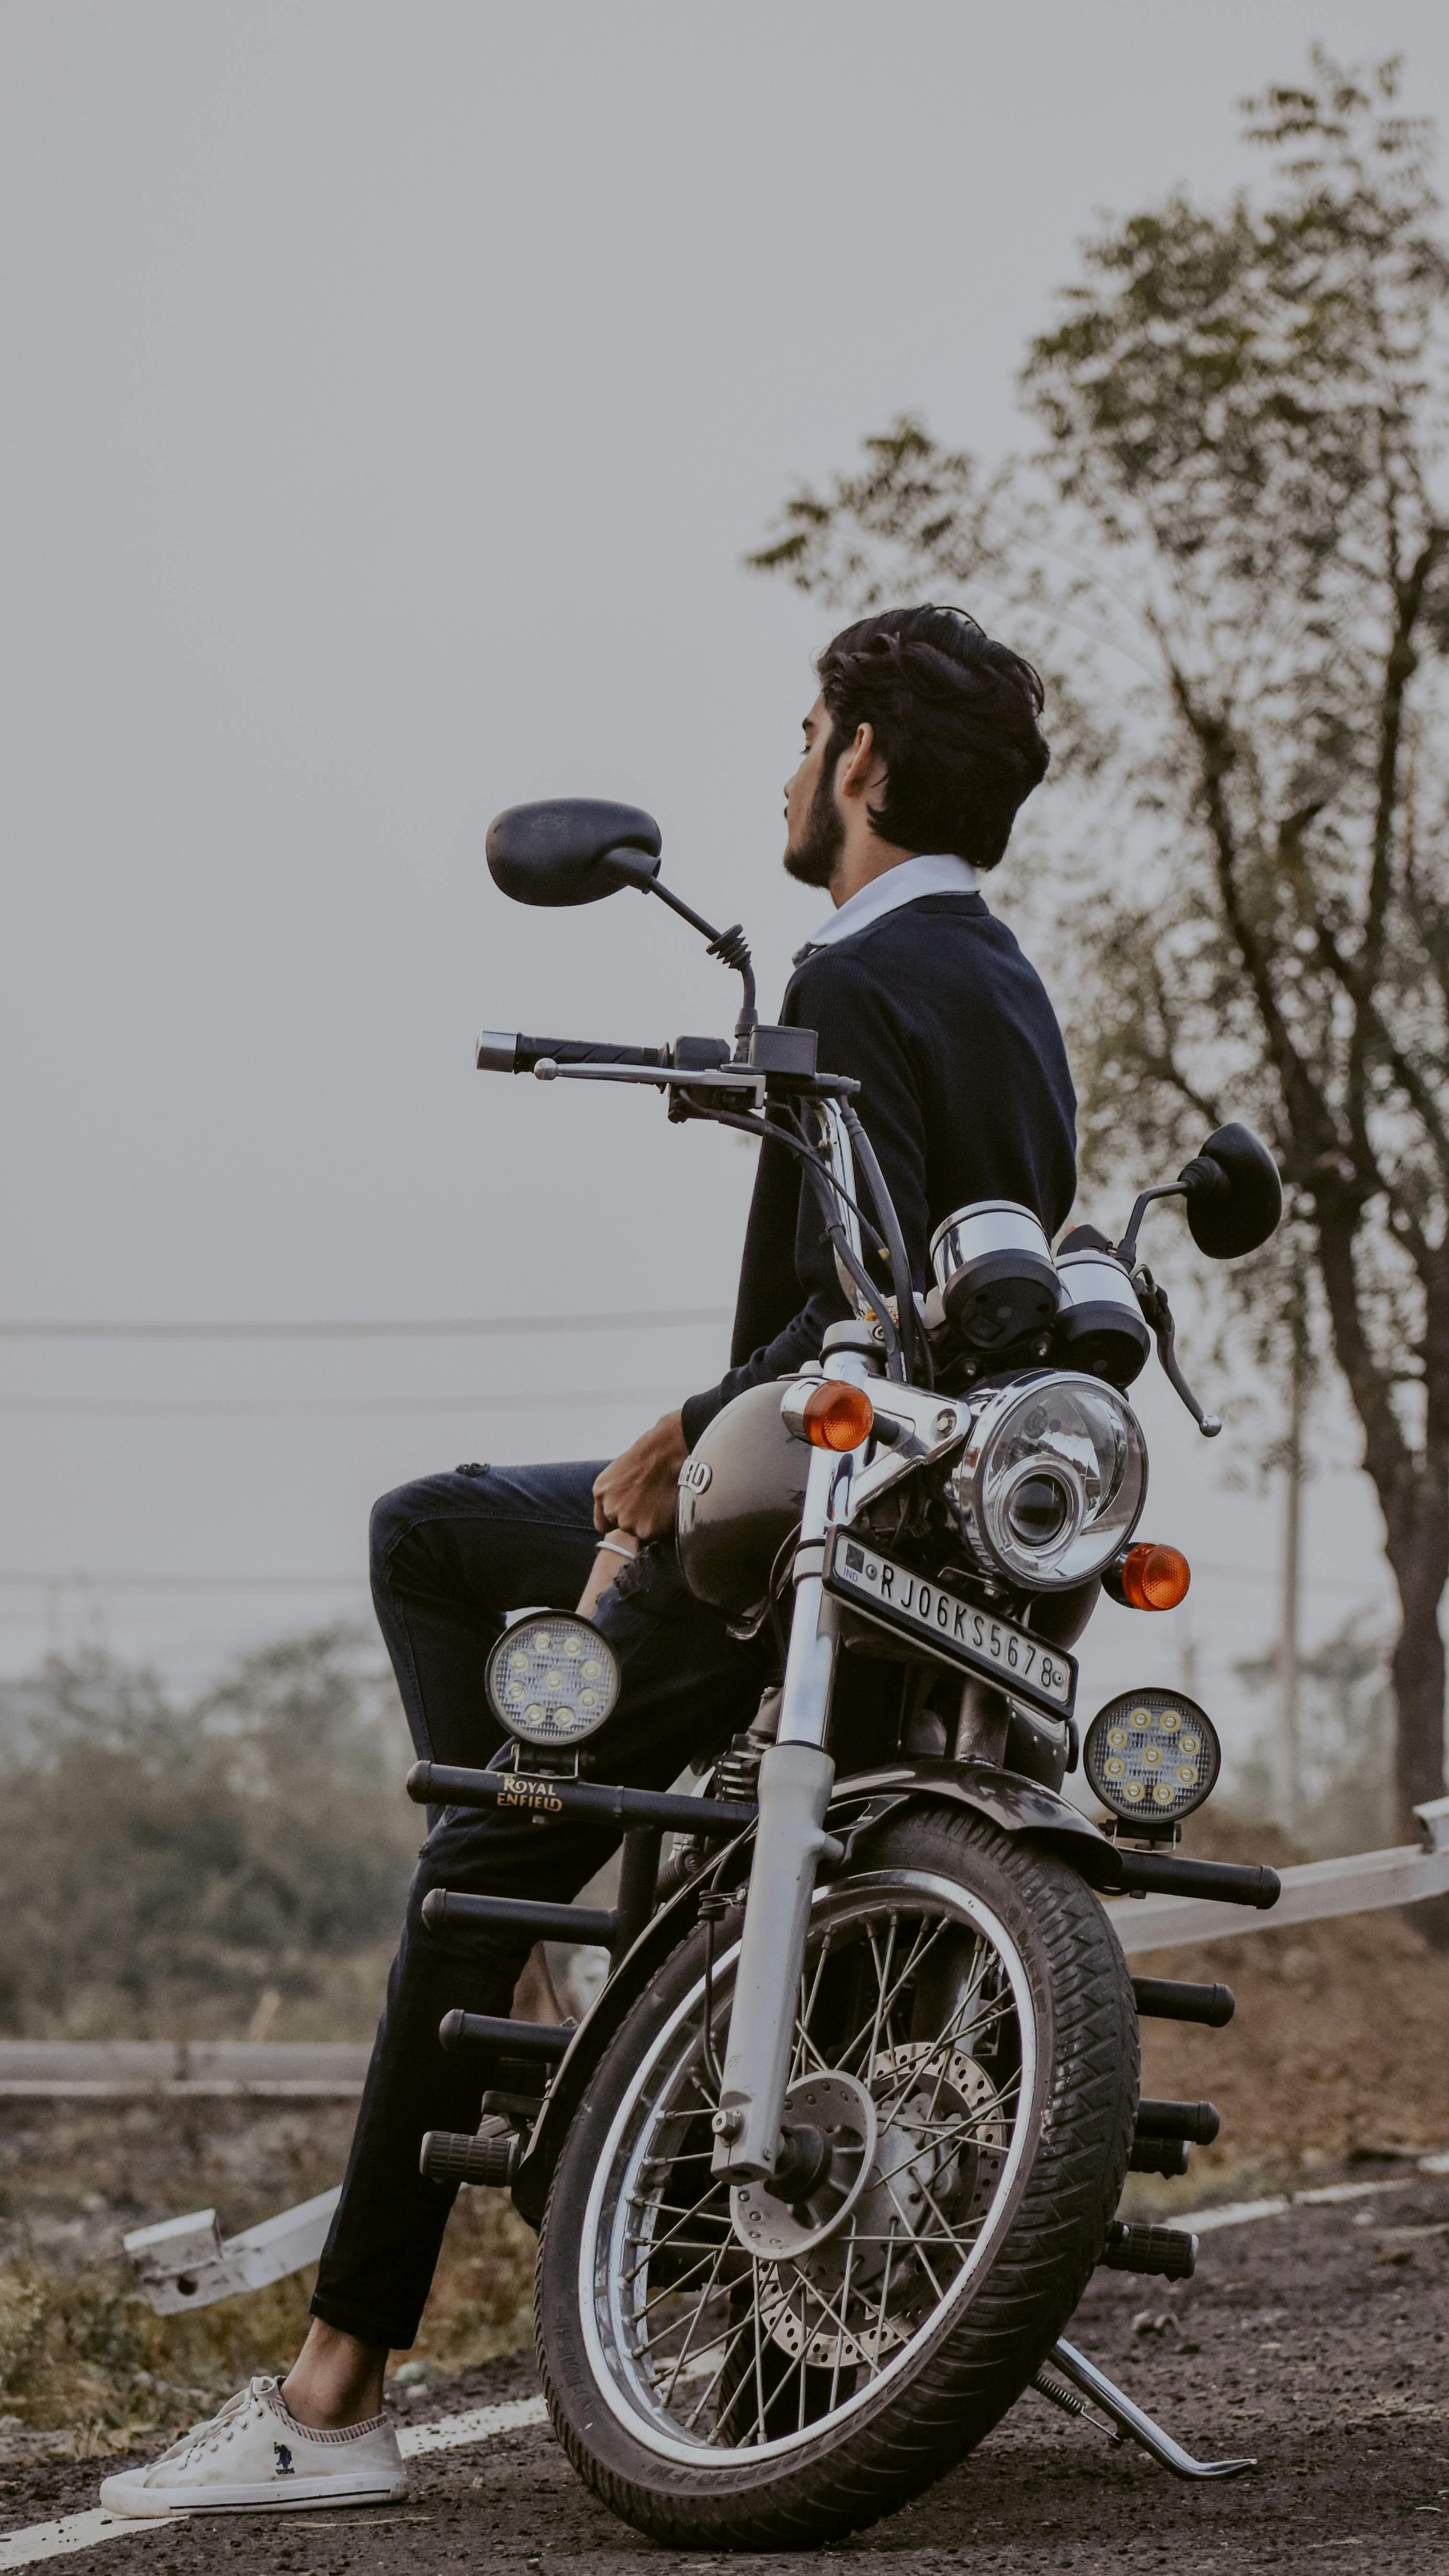 Tumblr | Biker photography, Motorcycle photo shoot, Motorcycle photography